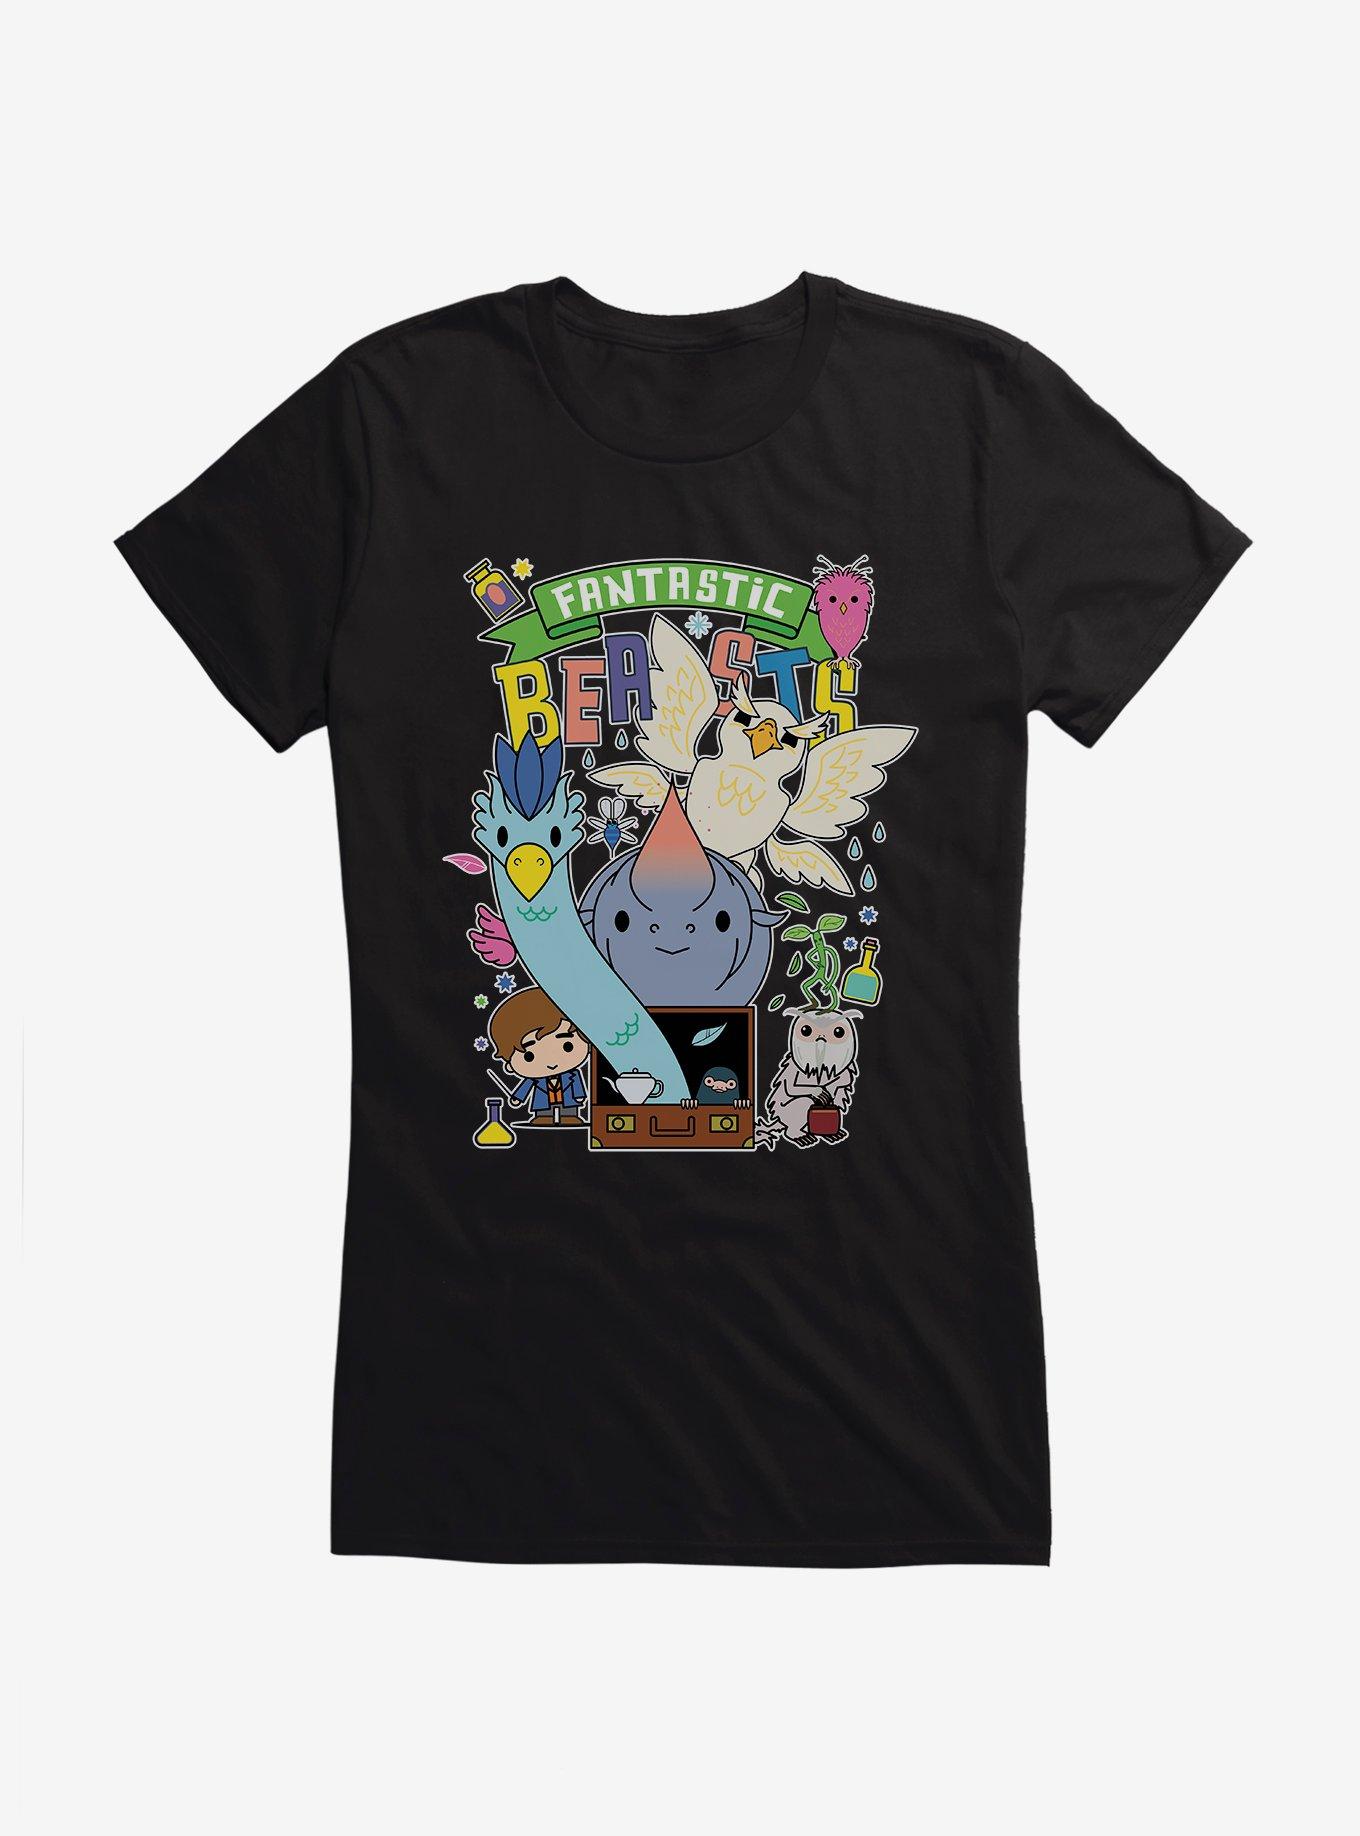 Fantastic Beasts Animal Friends Girls T-Shirt, BLACK, hi-res